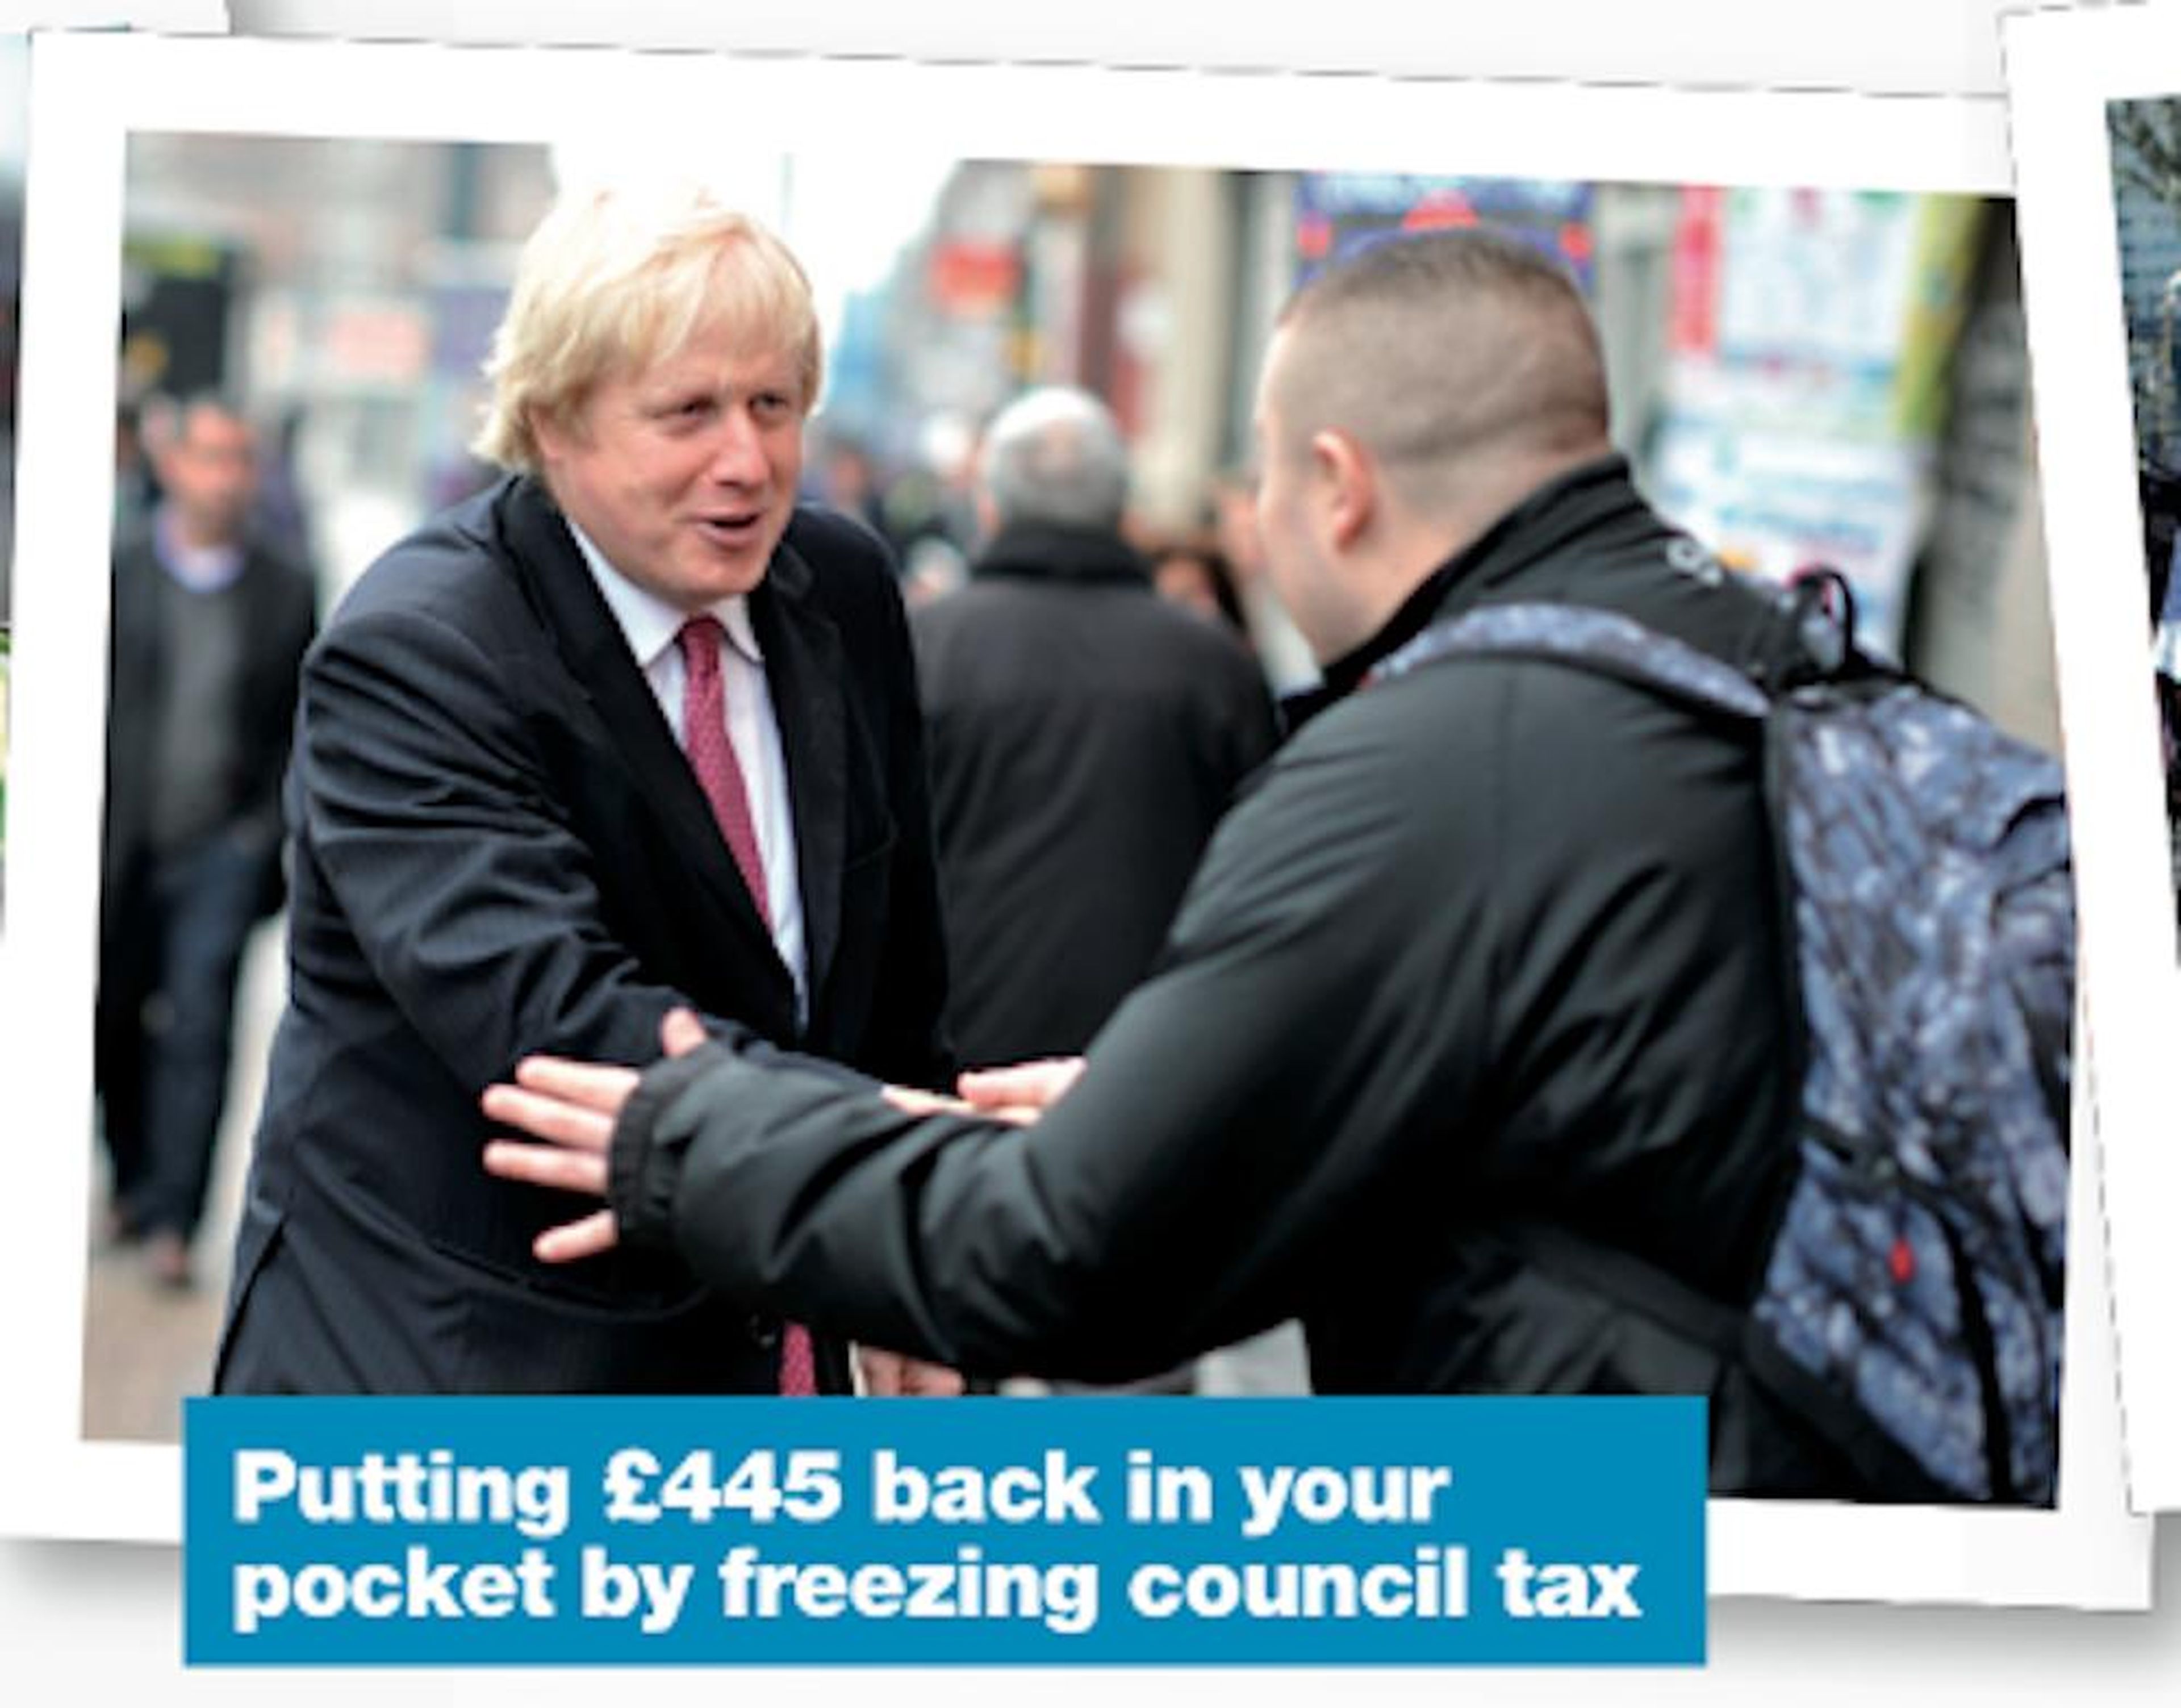 Boris Johnson's 2012 London mayor leaflet